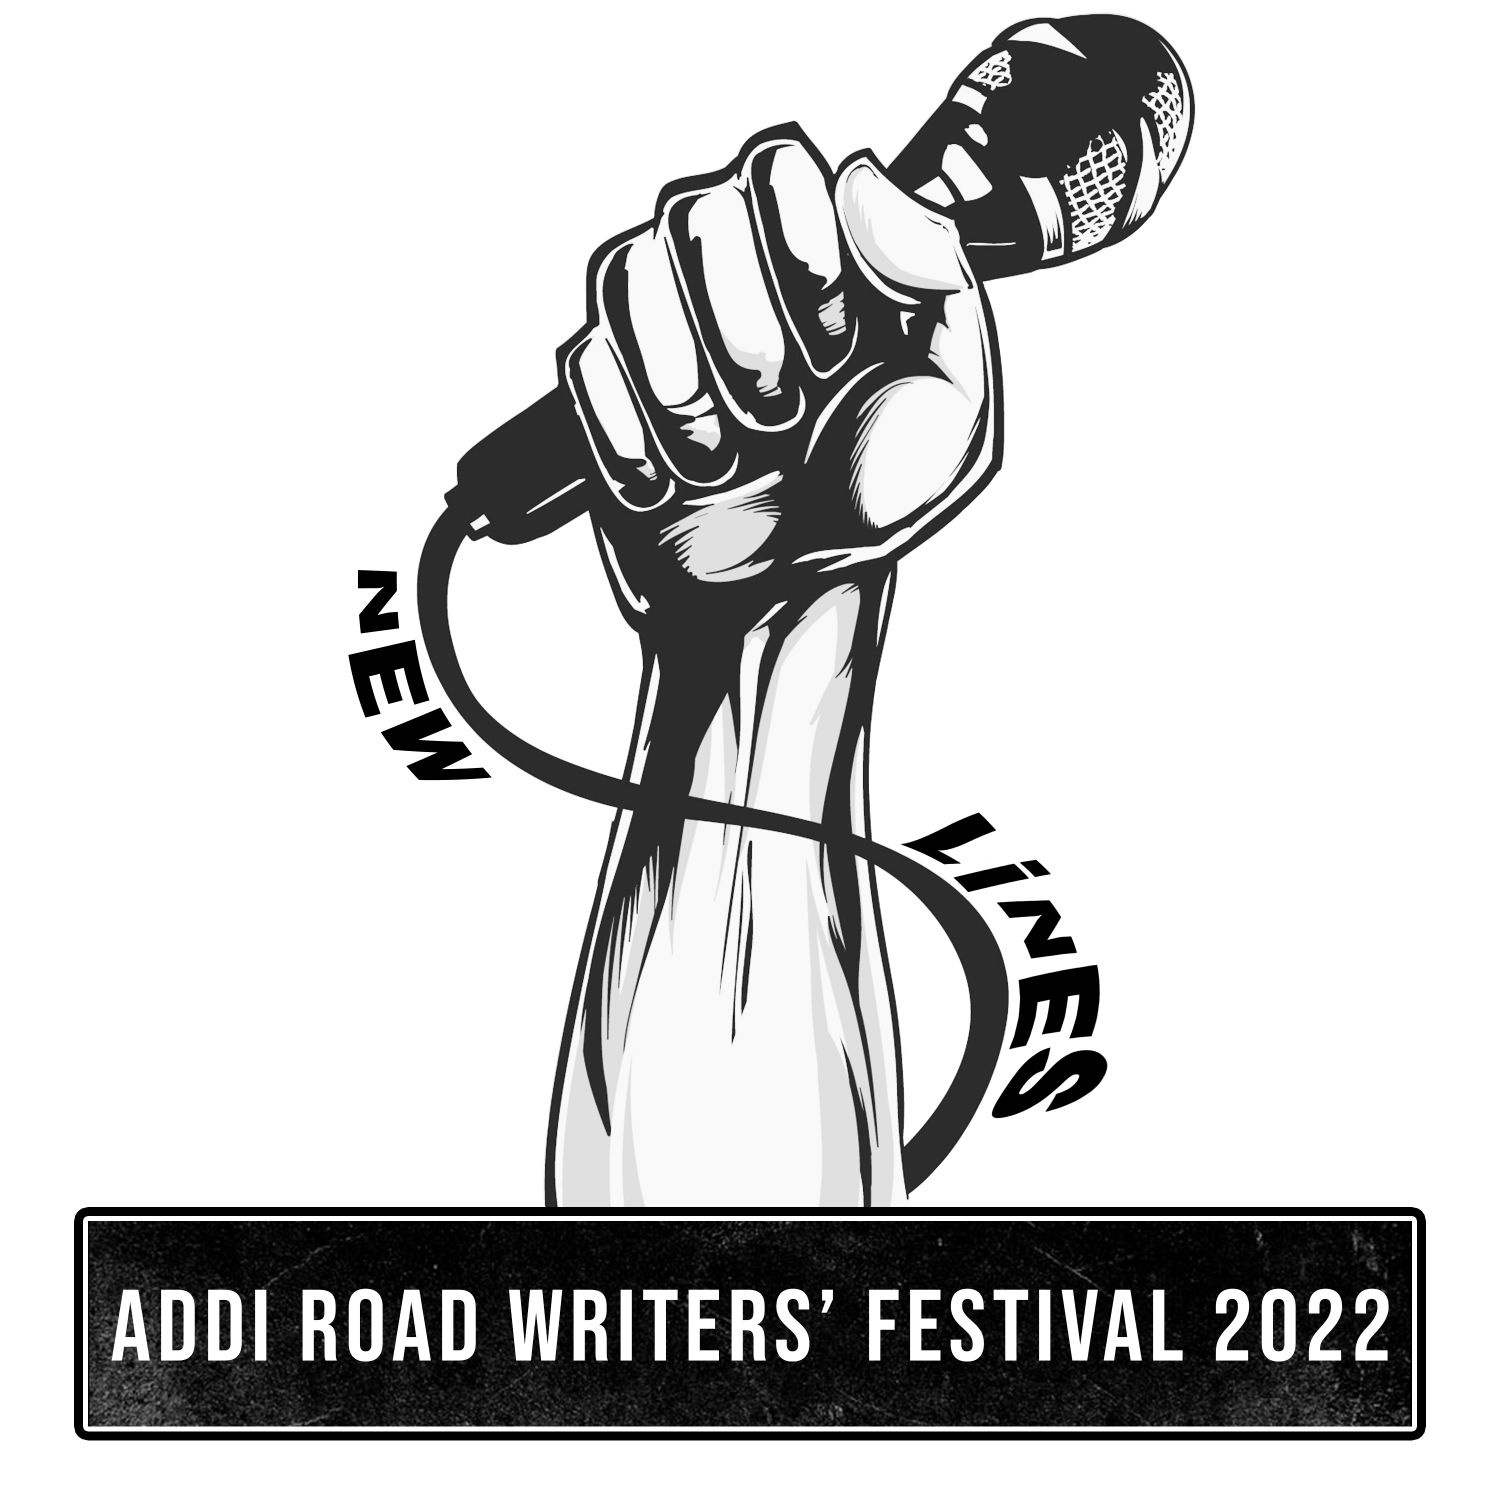 Addi Road Writers’ Festival 2022 – The Program